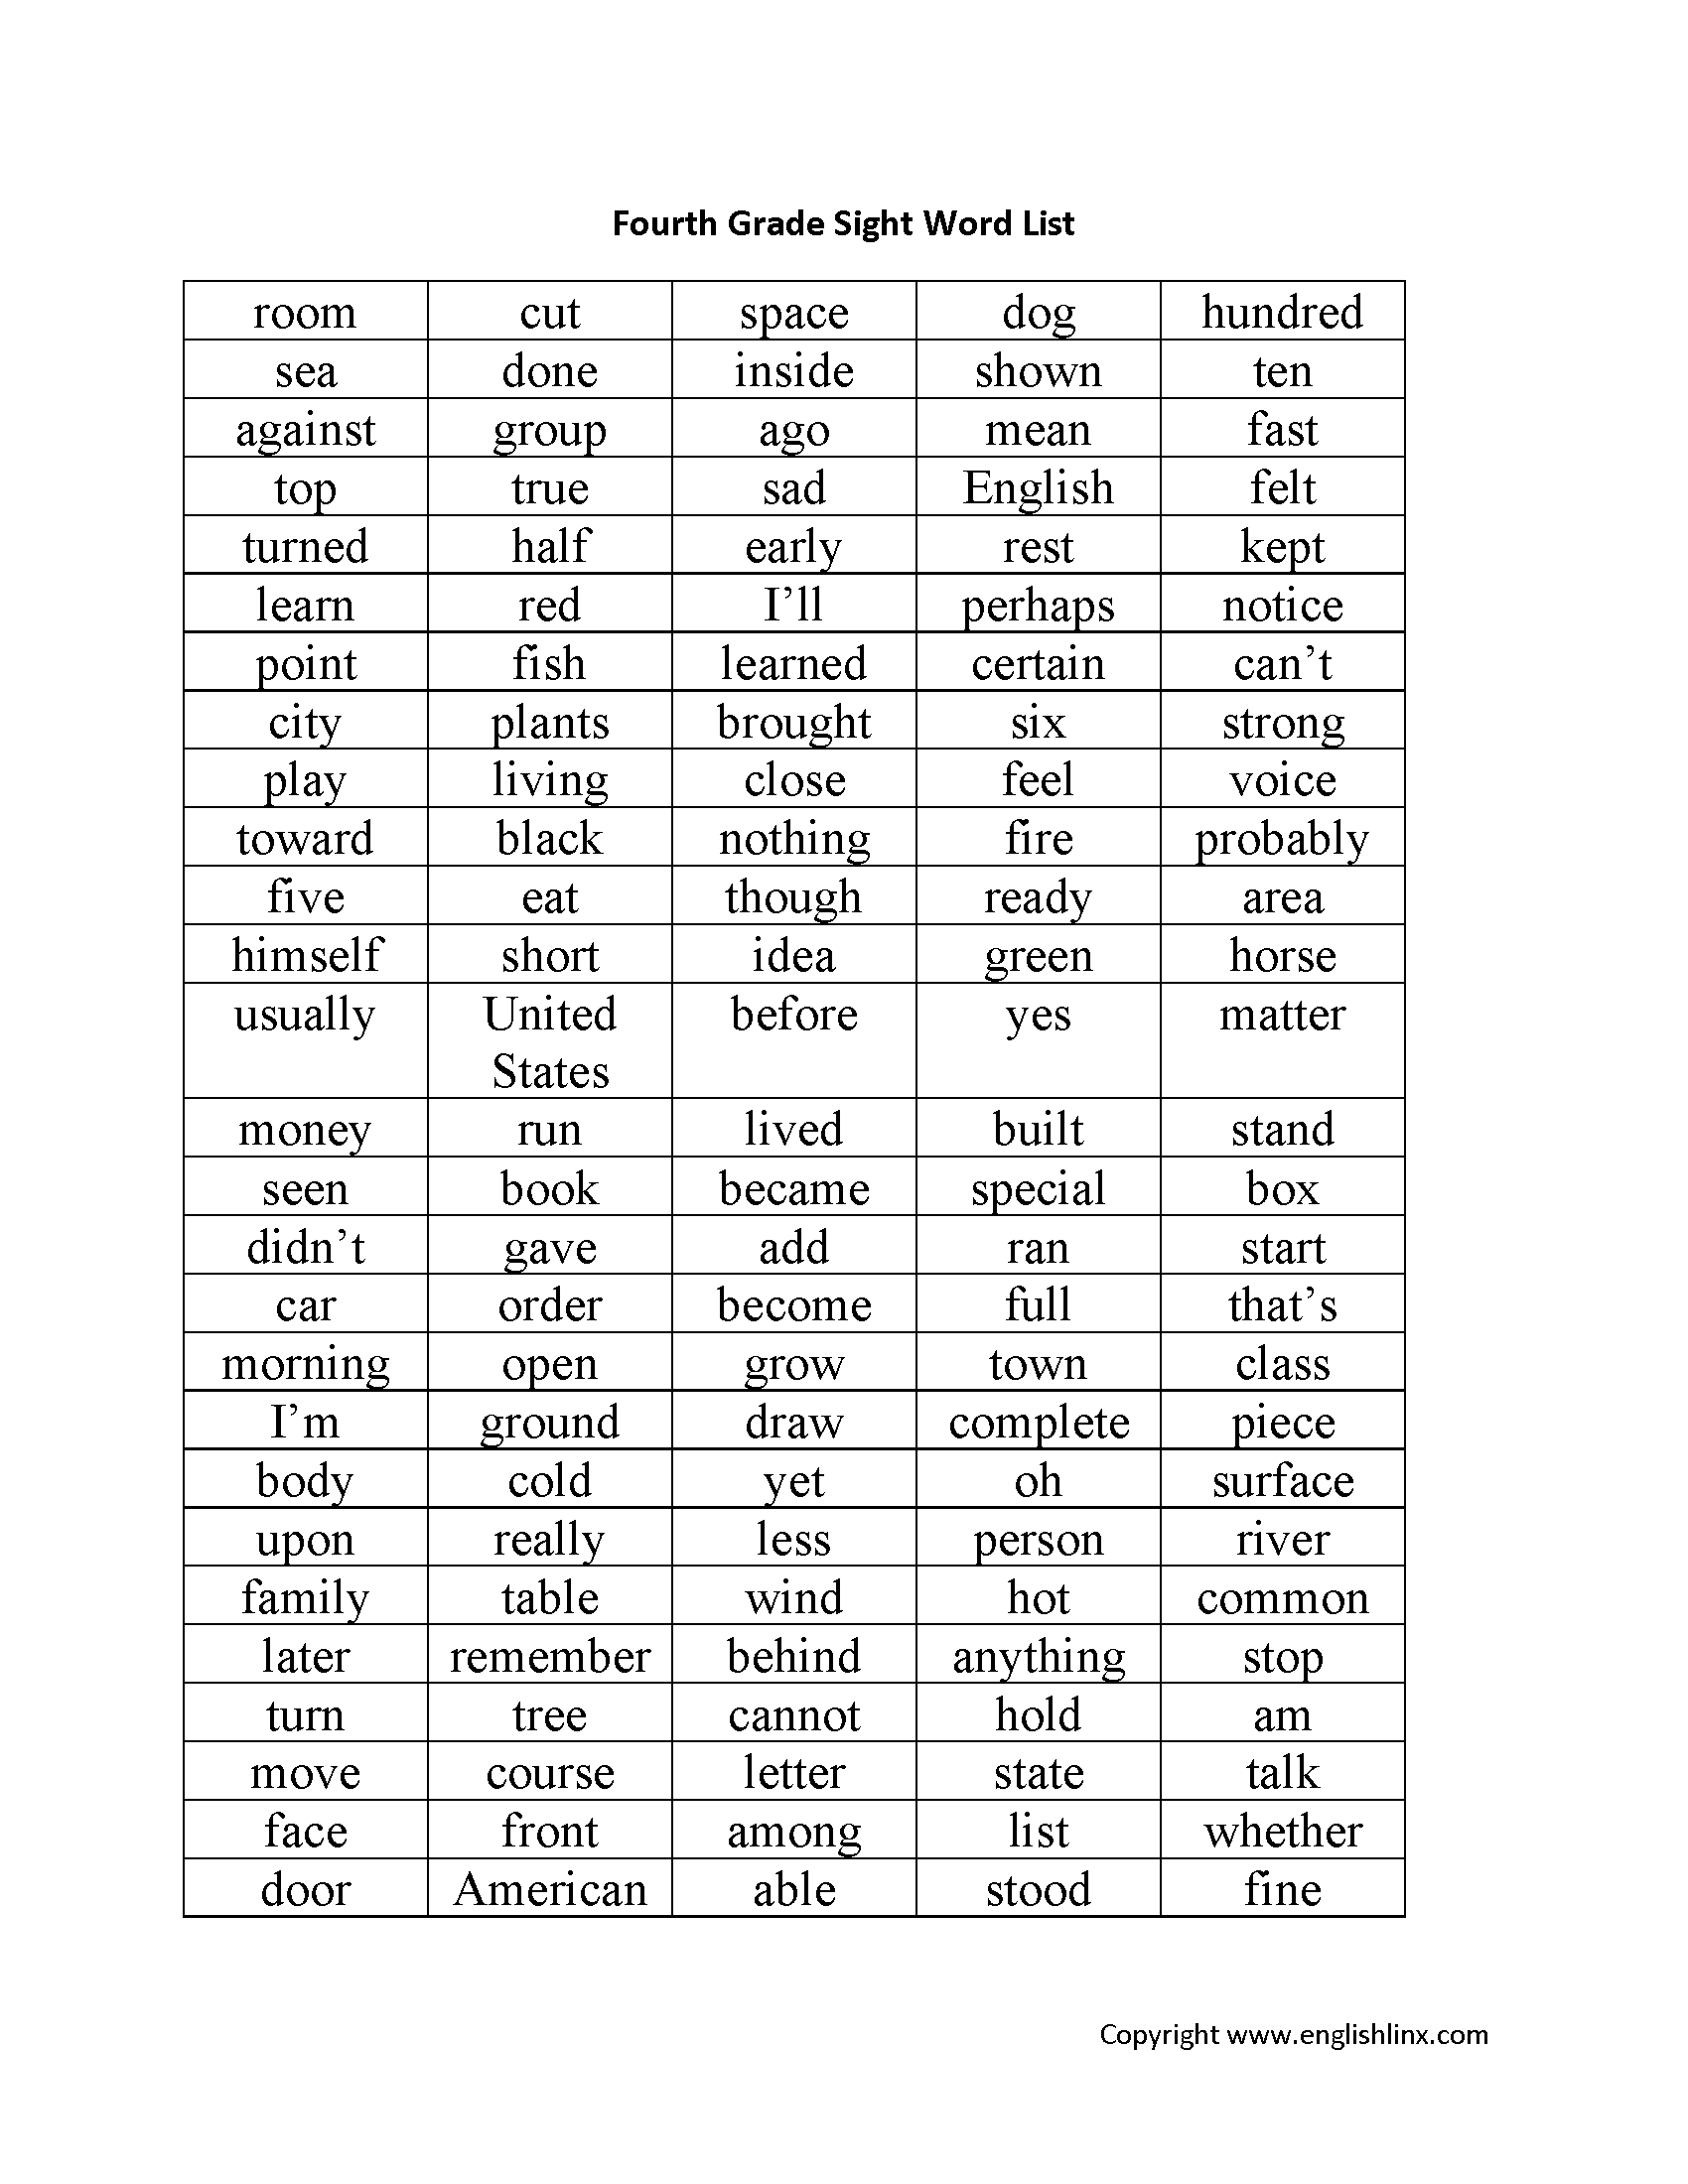 Fourth Grade Spelling Words List Worksheets